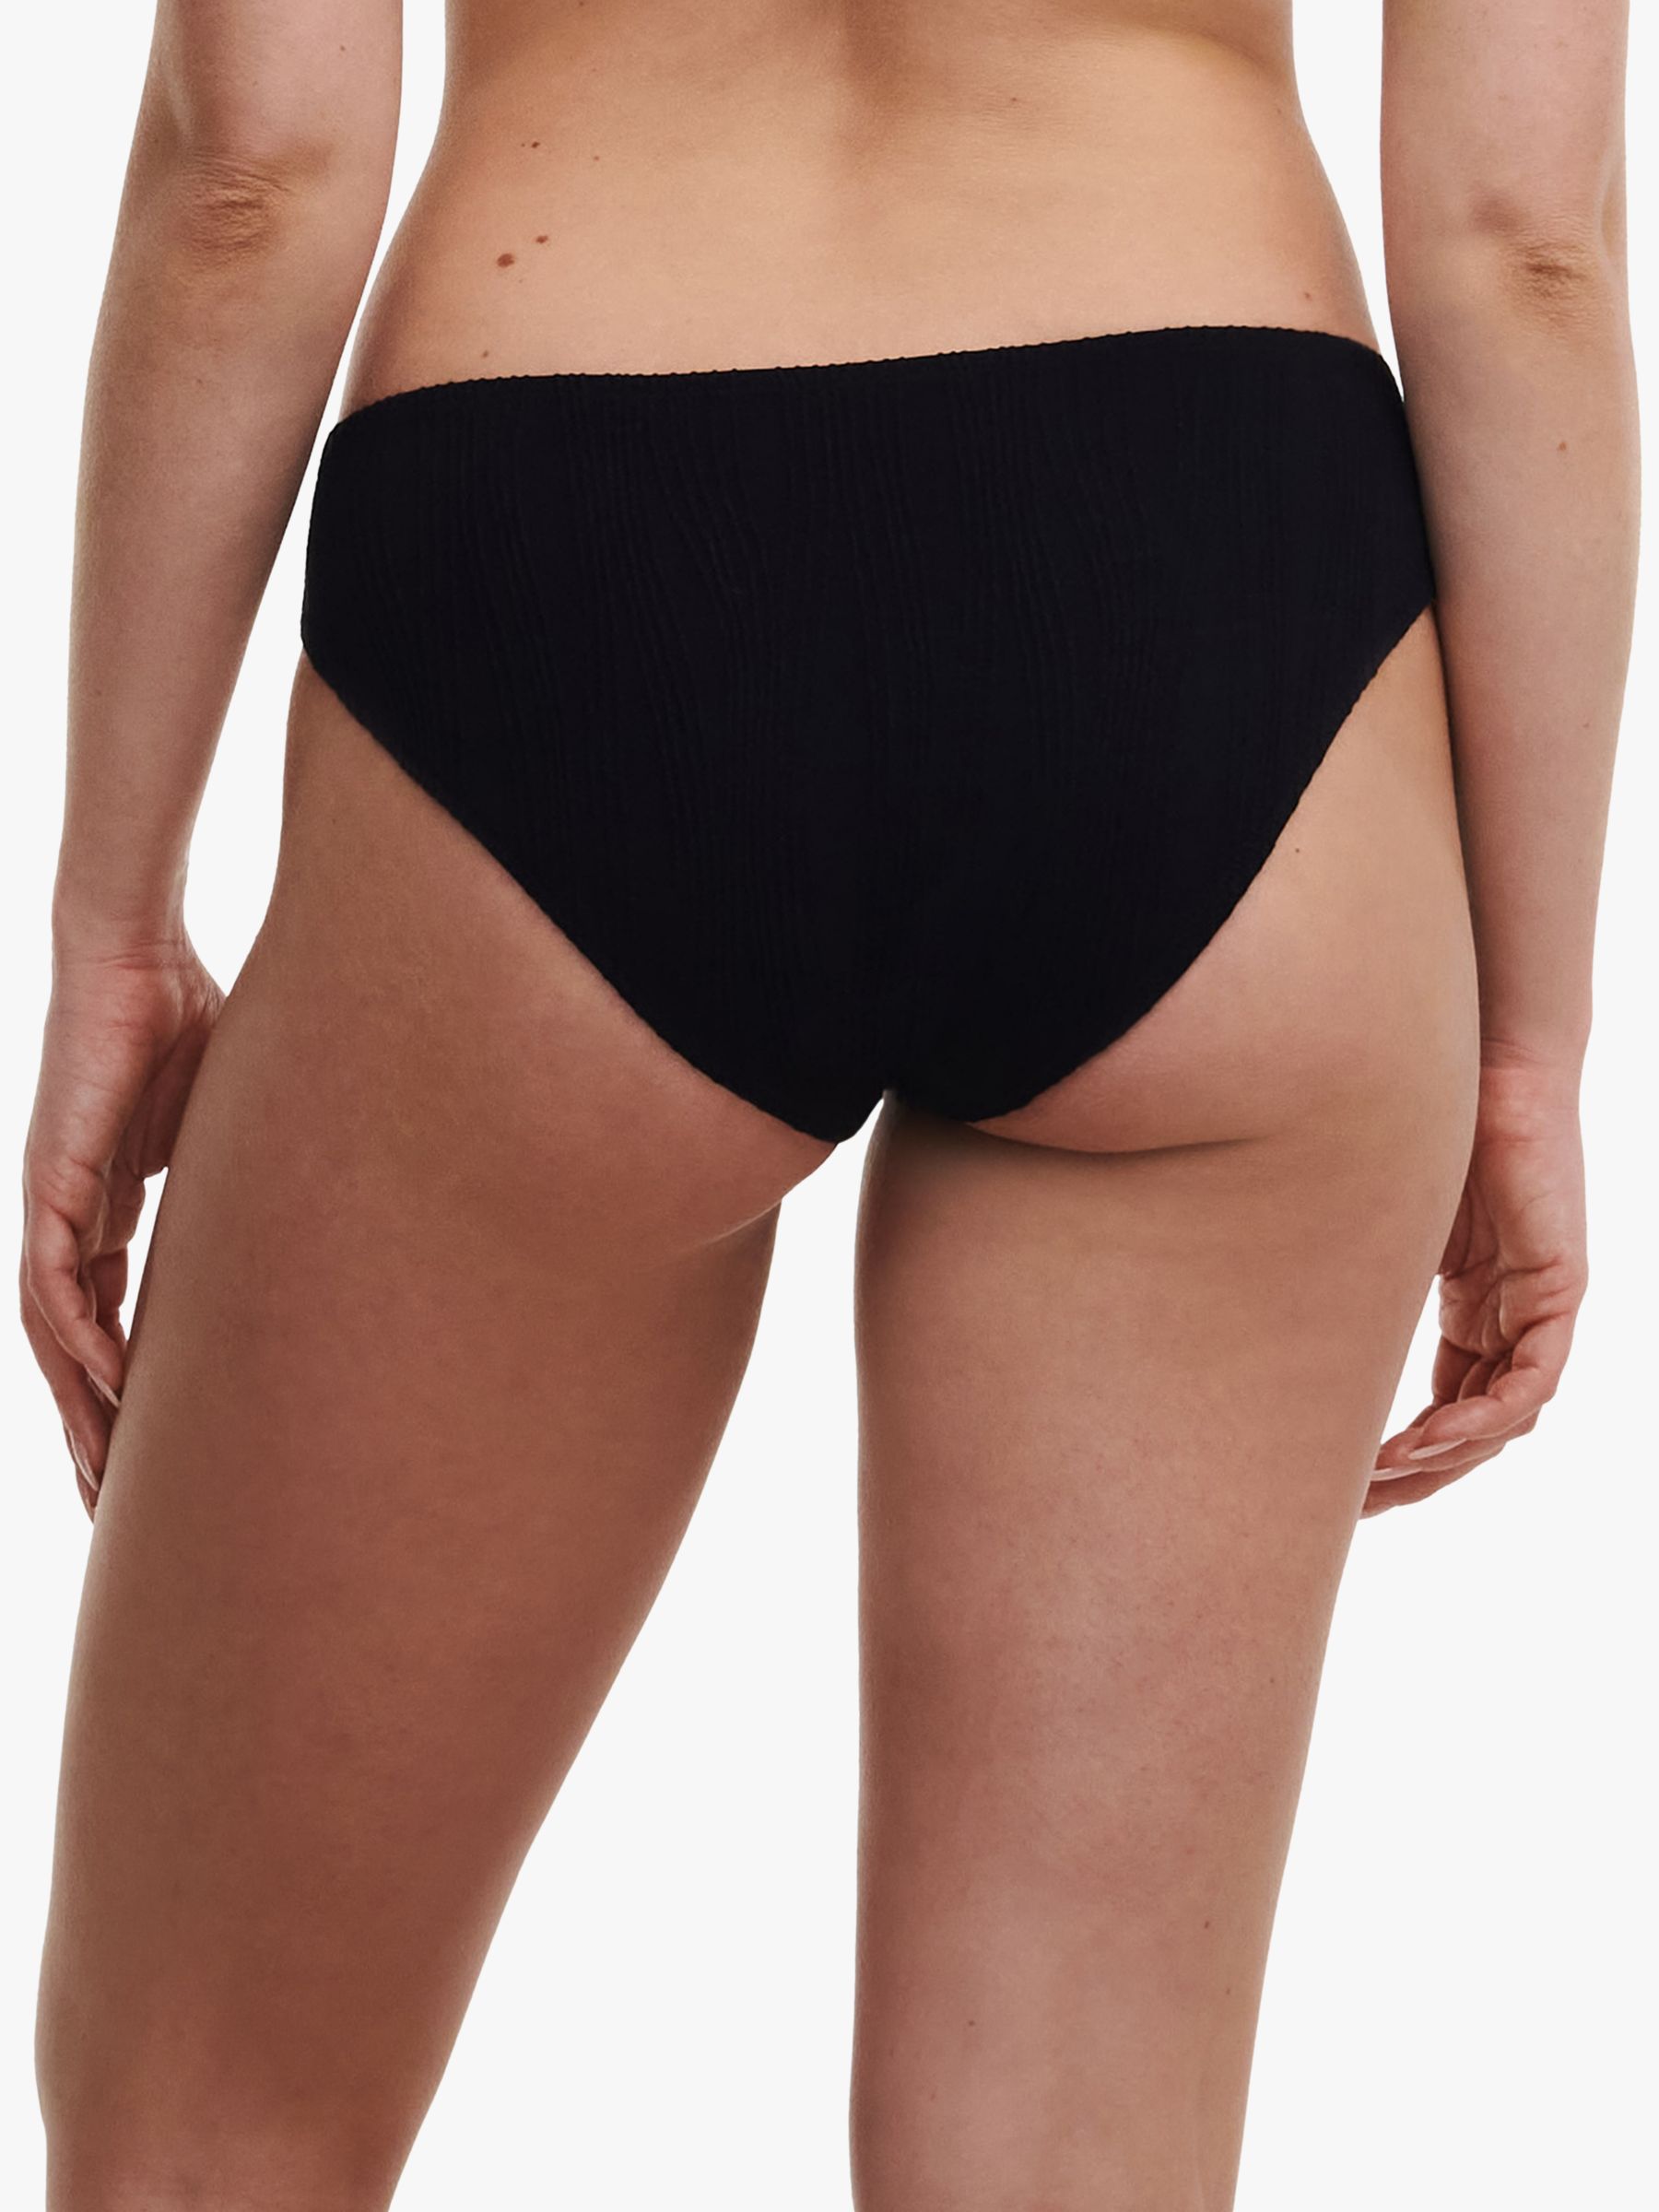 Chantelle Pulp Swimwear Textured Bikini Bottoms, Black, One Size